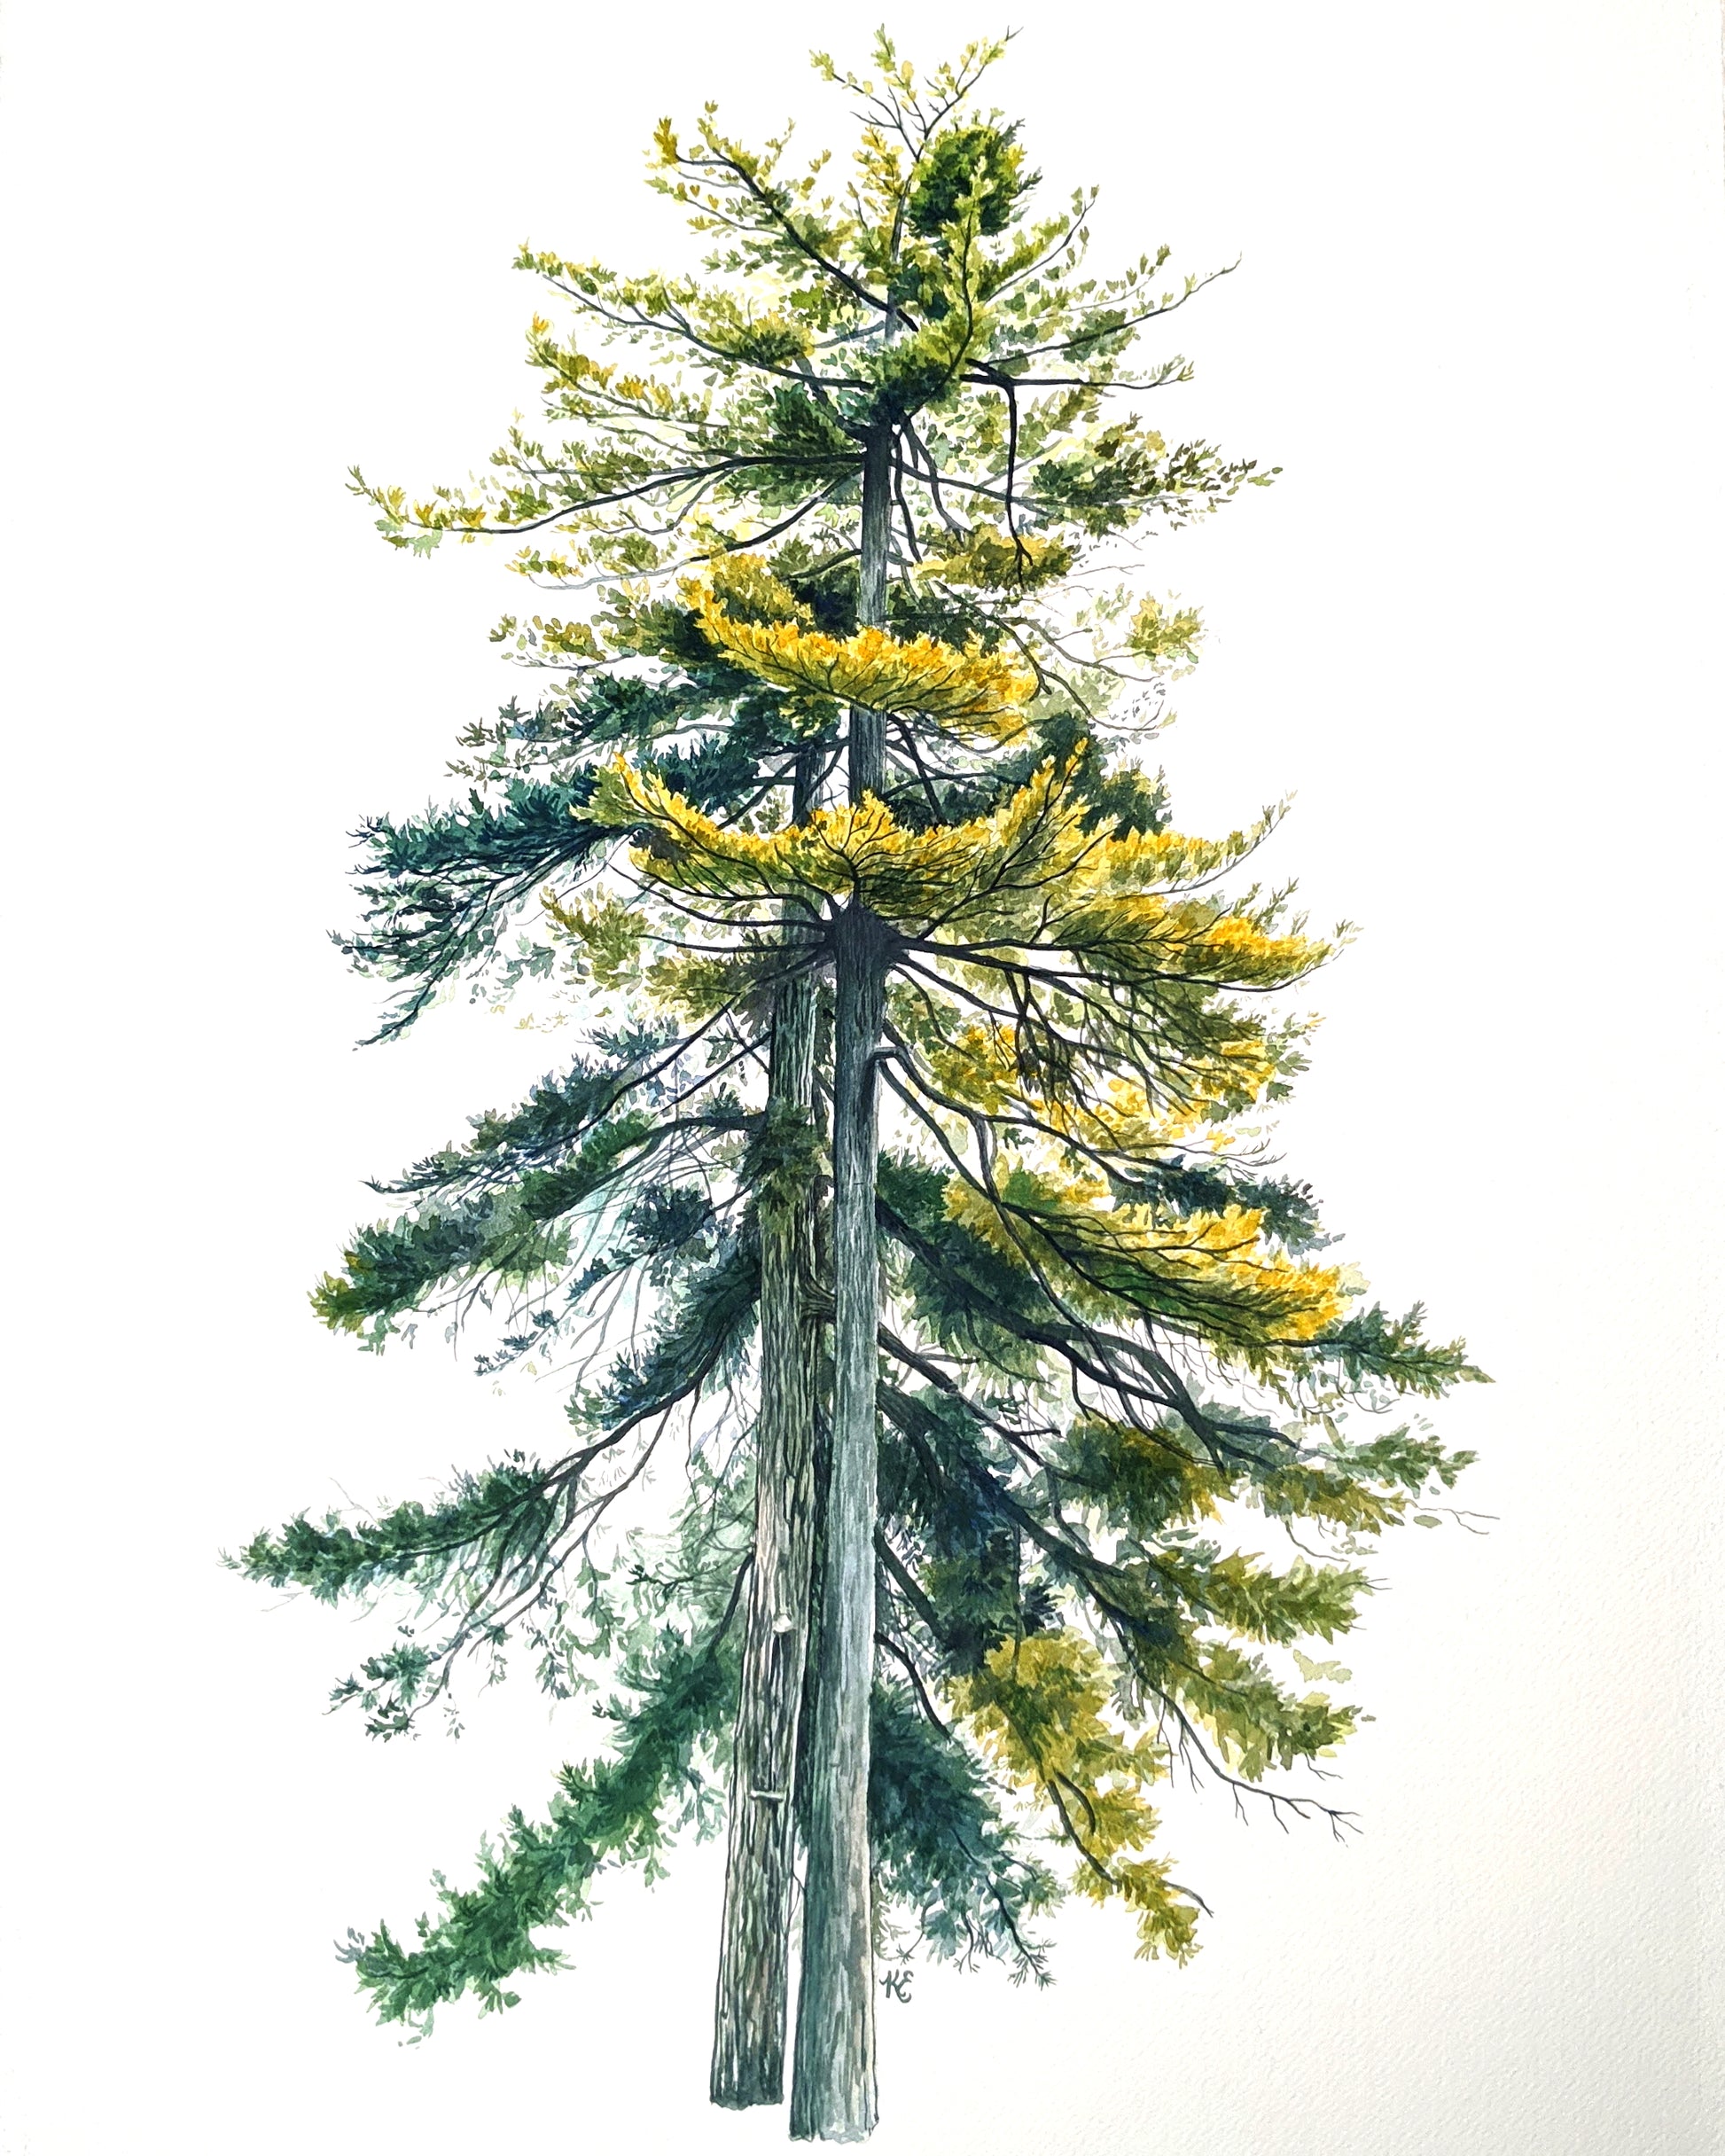 Pair of Pine Trees - Original Painting - 18x24" - Kim Everhard Art